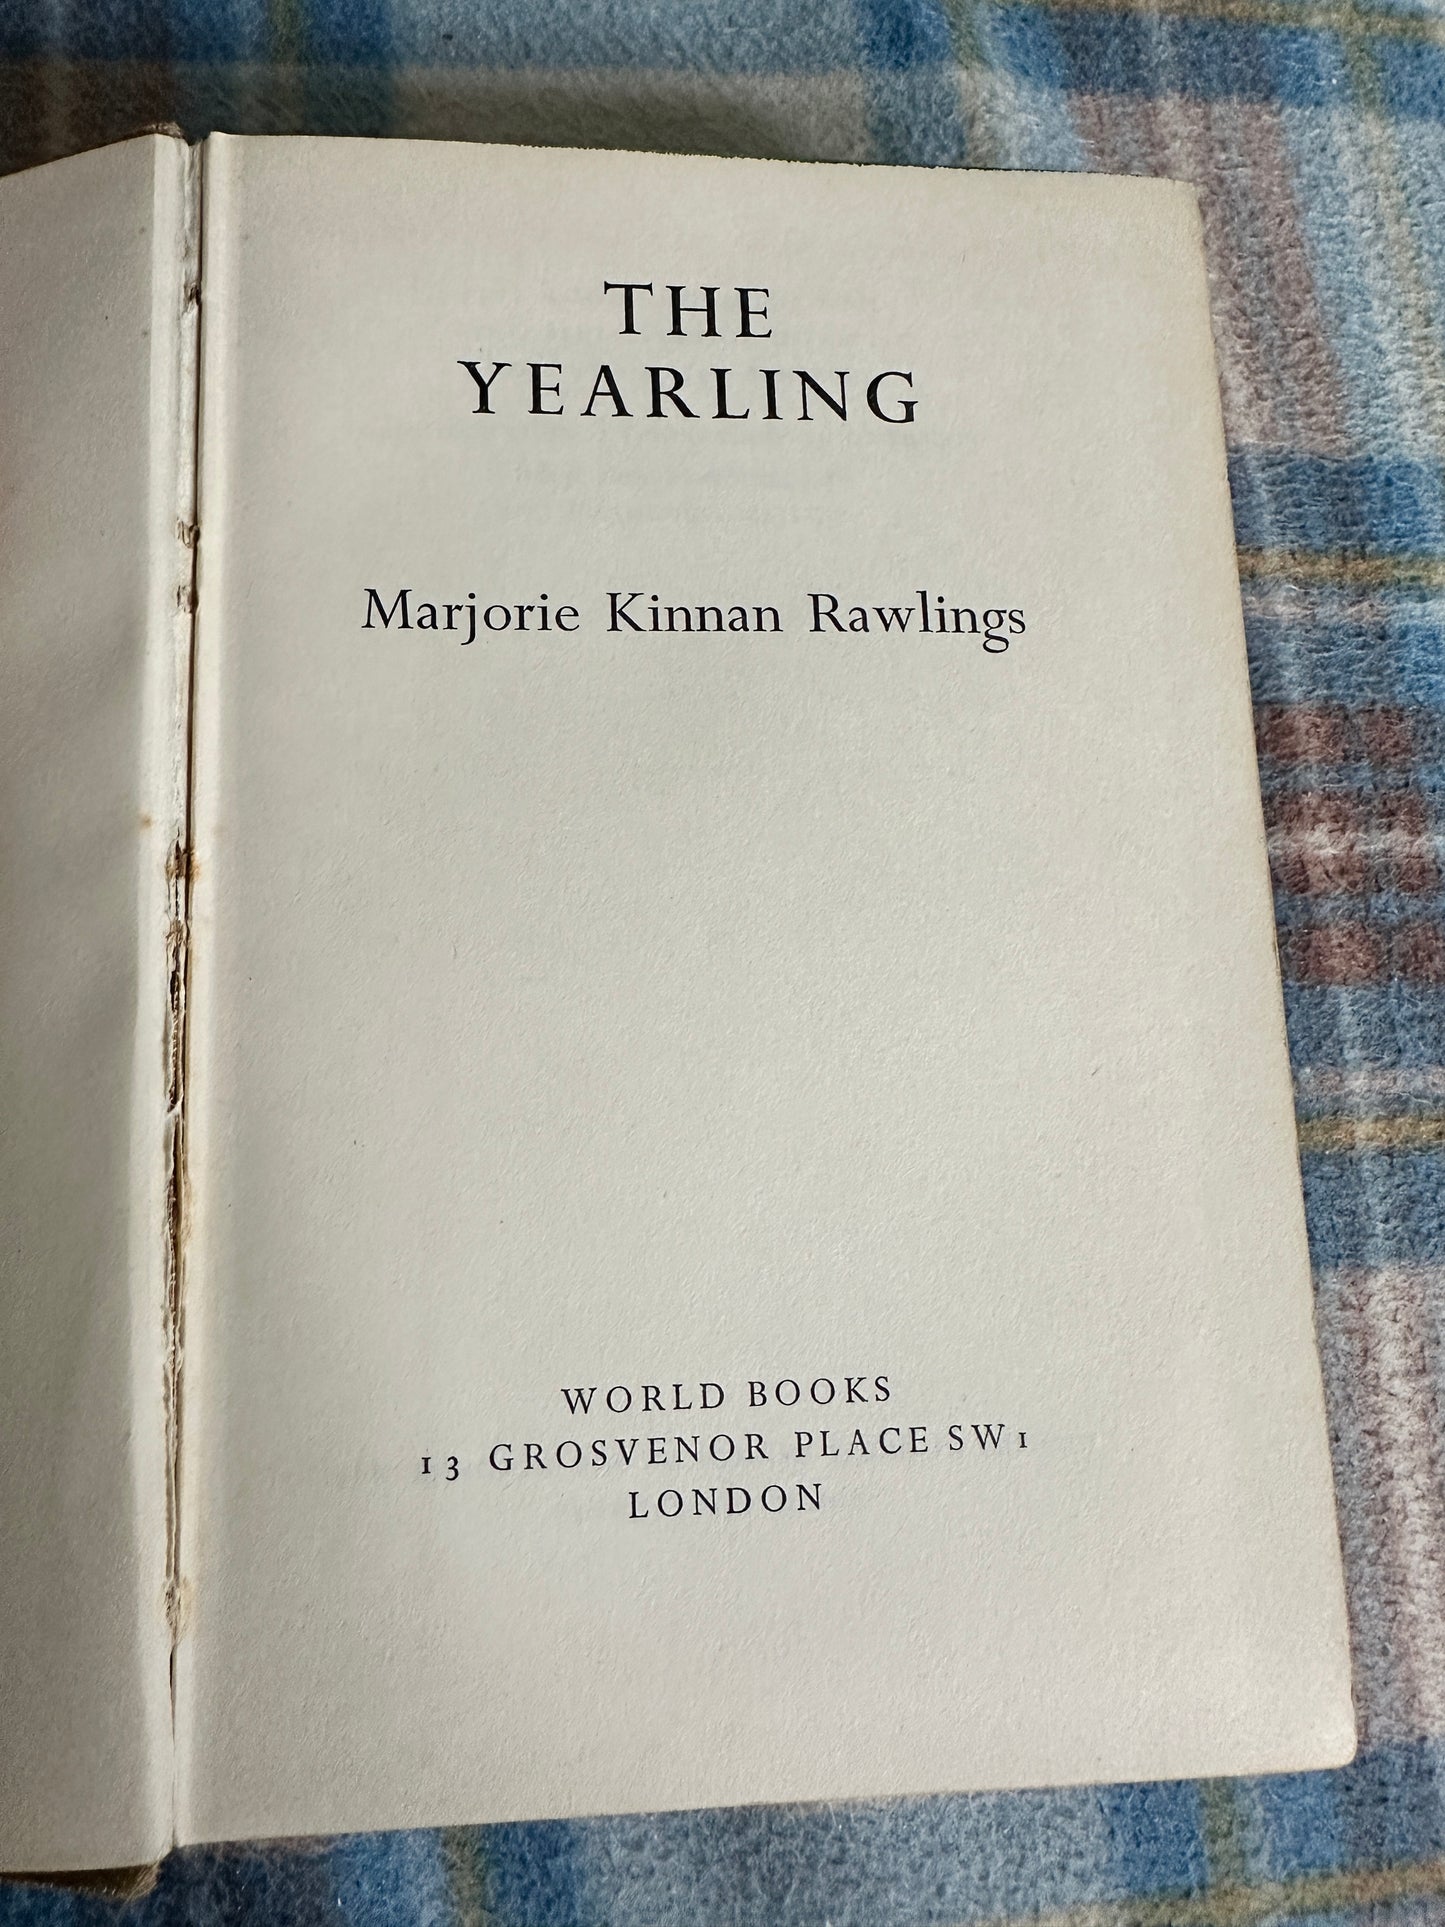 1940 The Yearling - Marjorie Kinnan Rawlings(World Books)